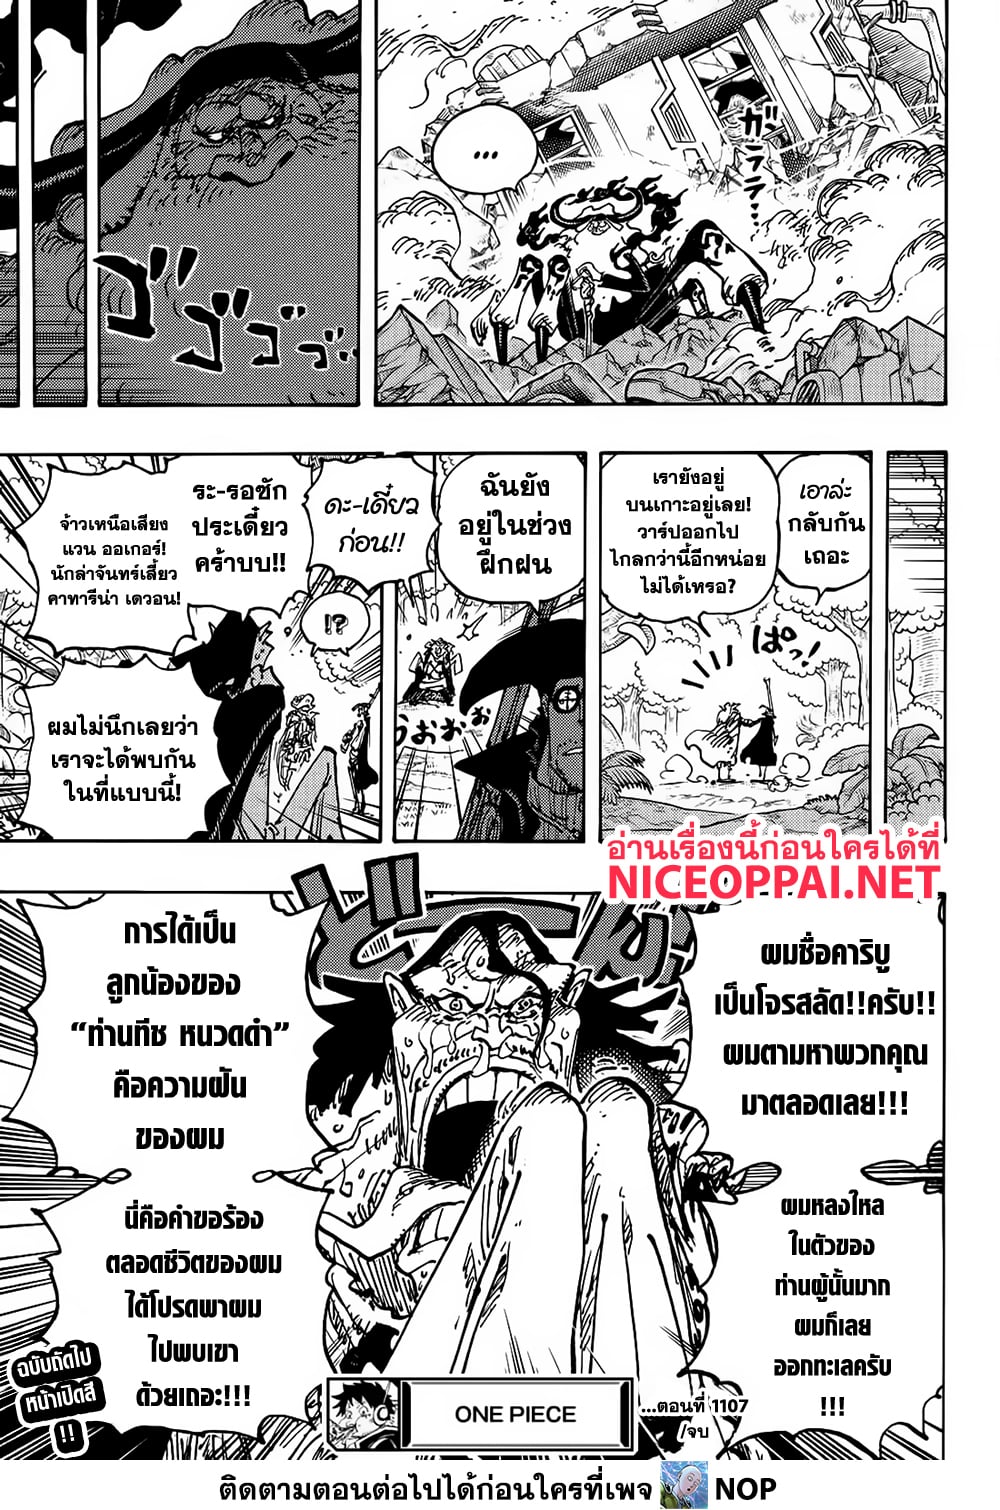 One Piece ตอนที่ 1107 (15)